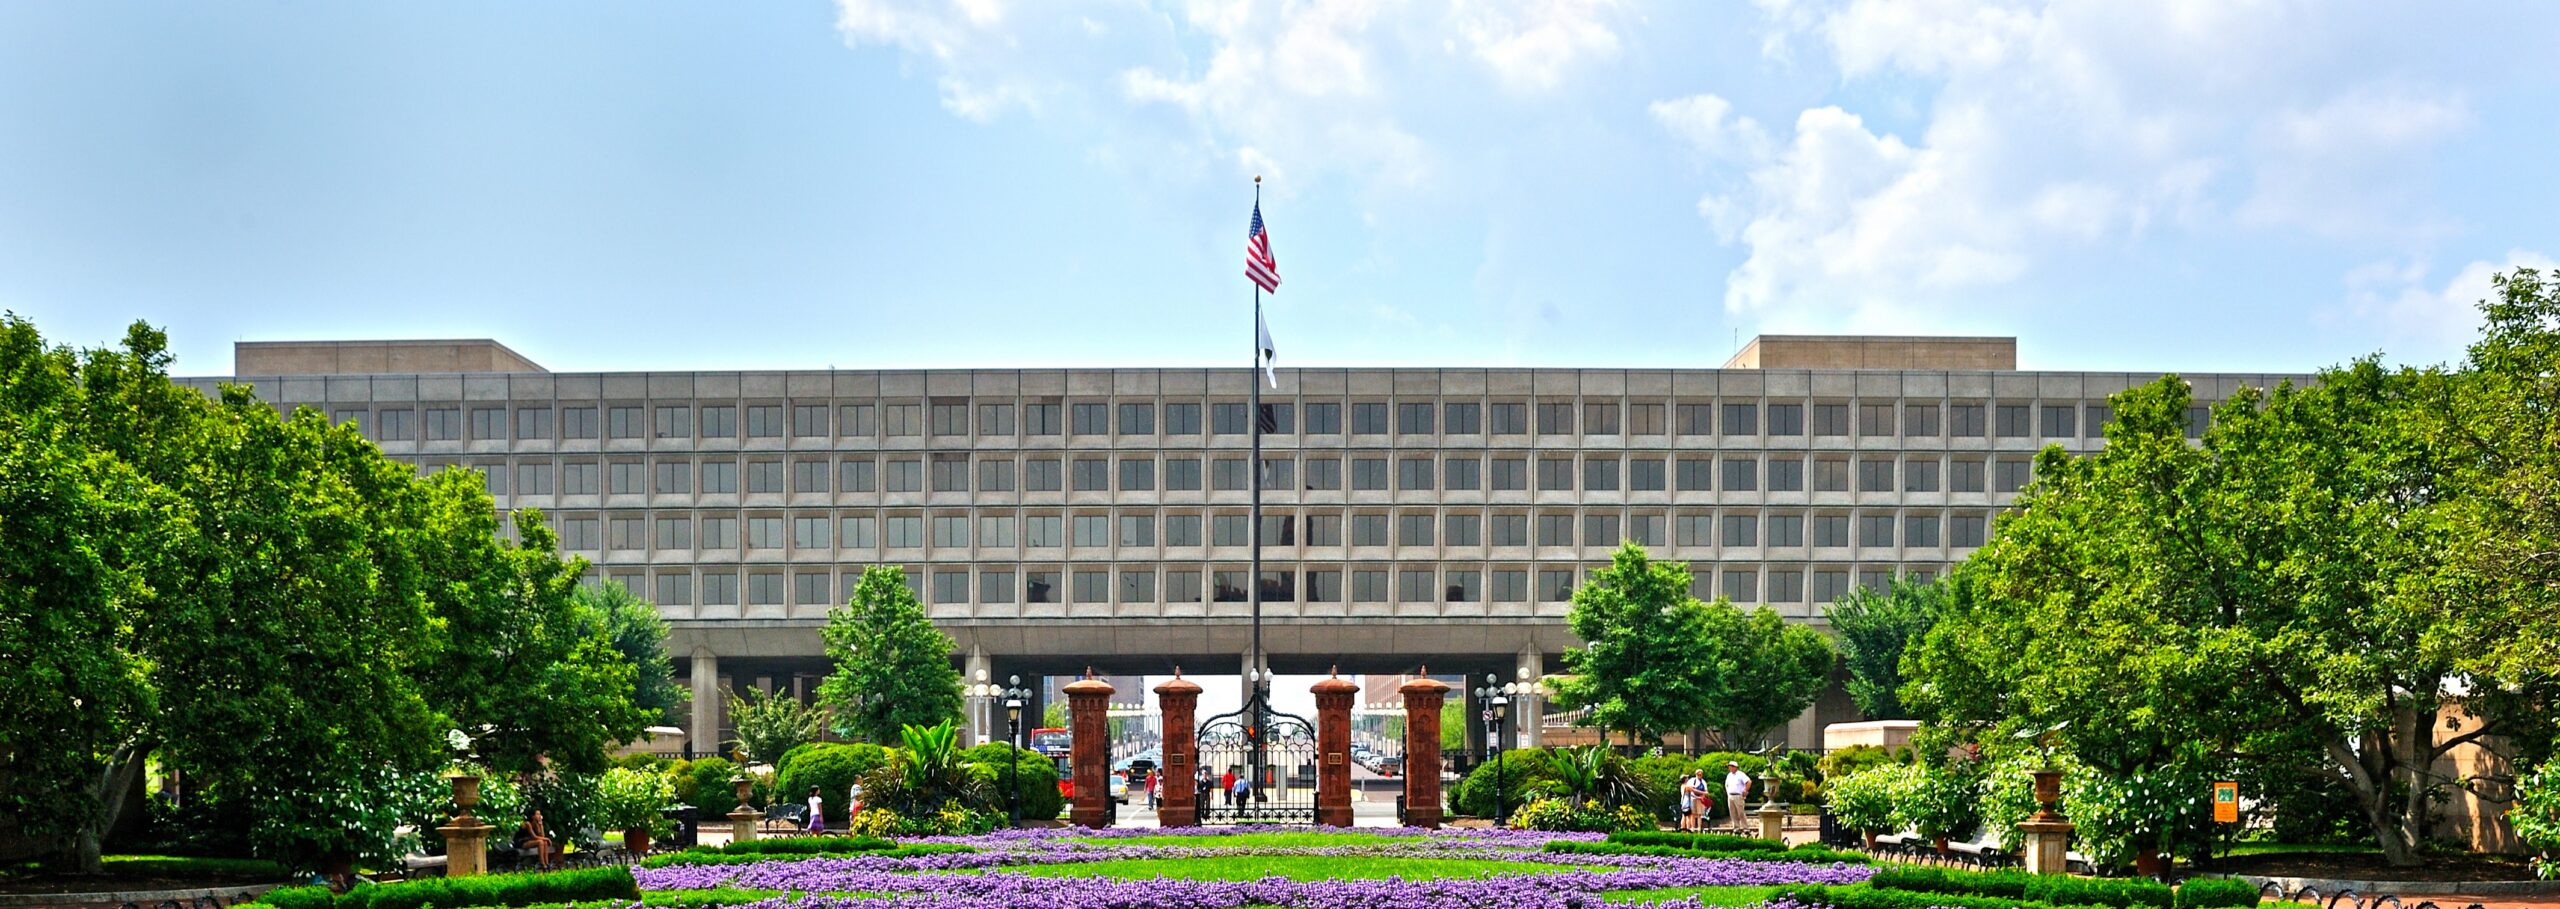 U.S. Energy Department headquarters building in Washington, D.C.